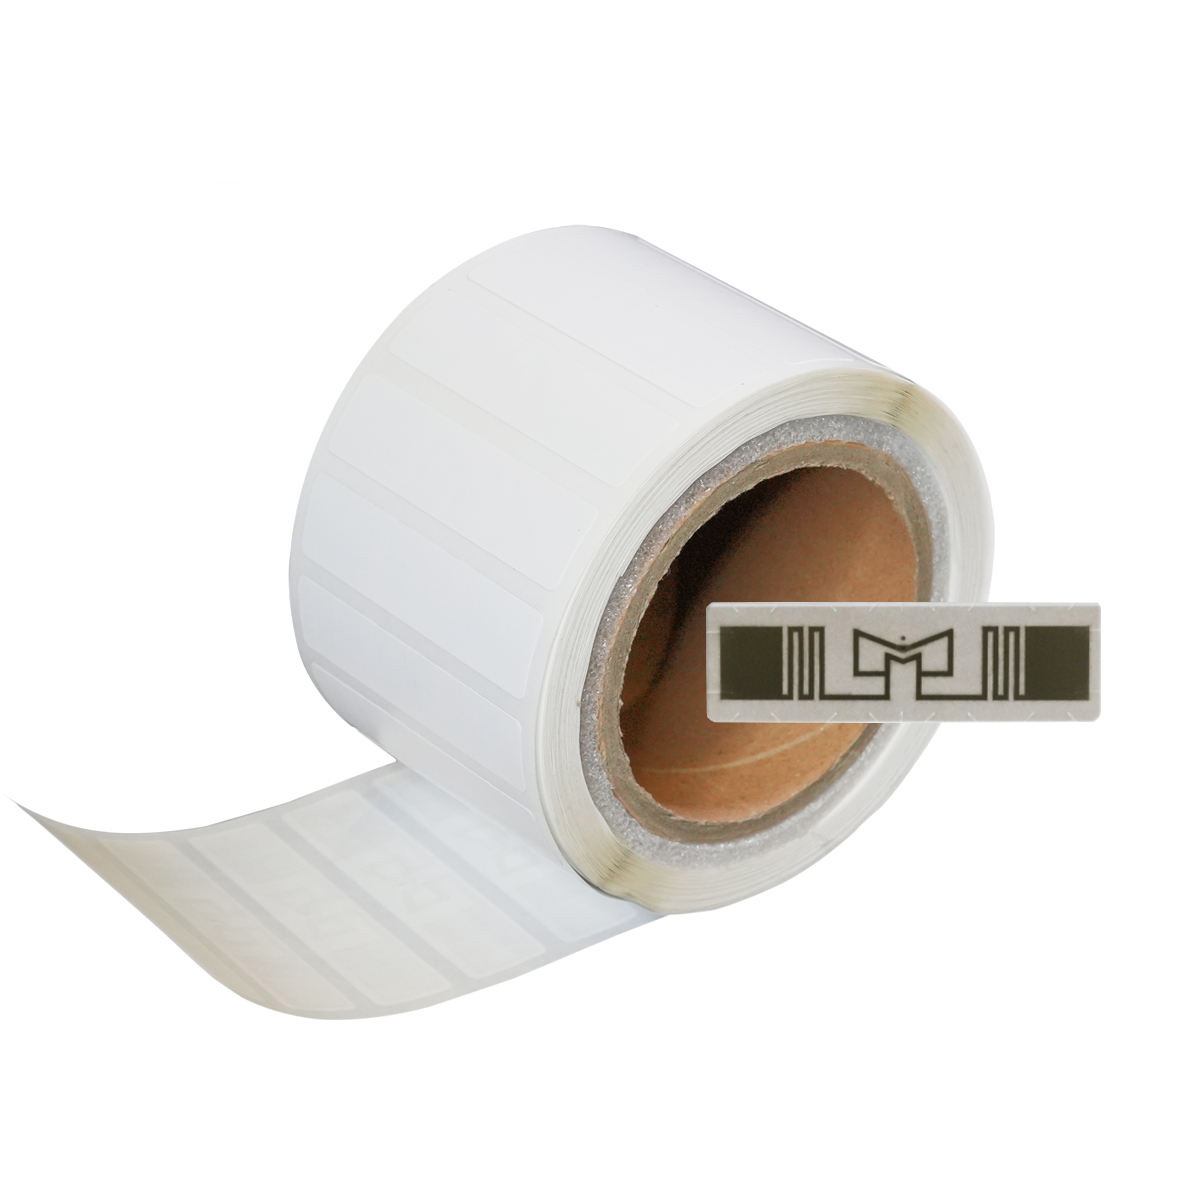 More than 10m Reading distance Long Range UHF RFID Label tag printable sticker